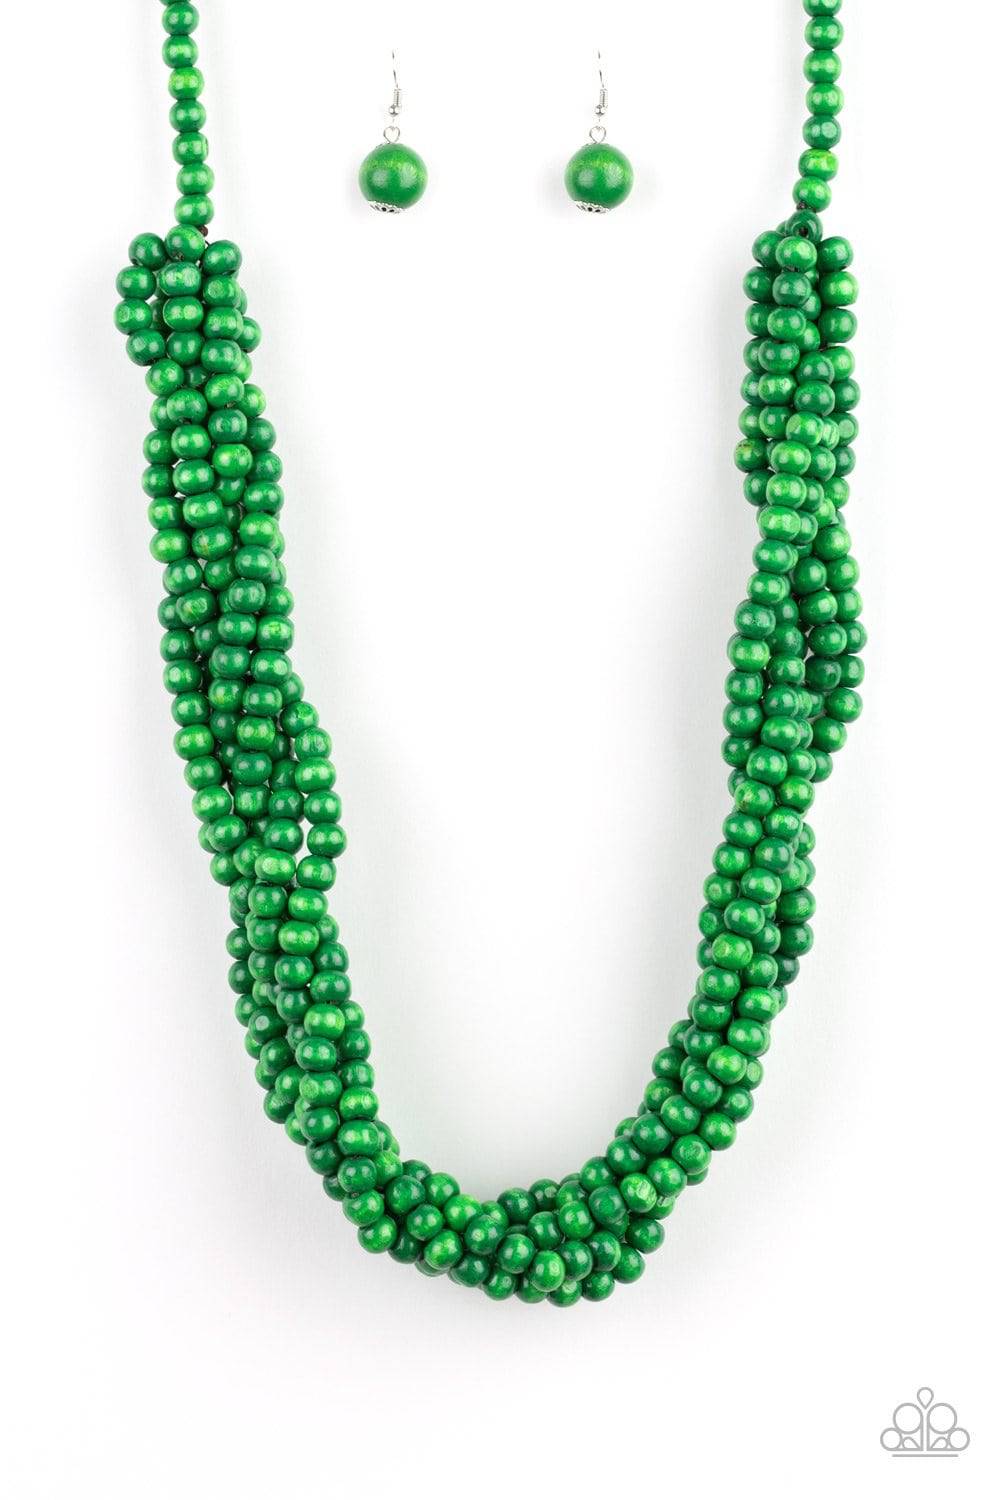 Tahiti Tropic - Green Wooden Necklace - Paparazzi Accessories - GlaMarous Titi Jewels